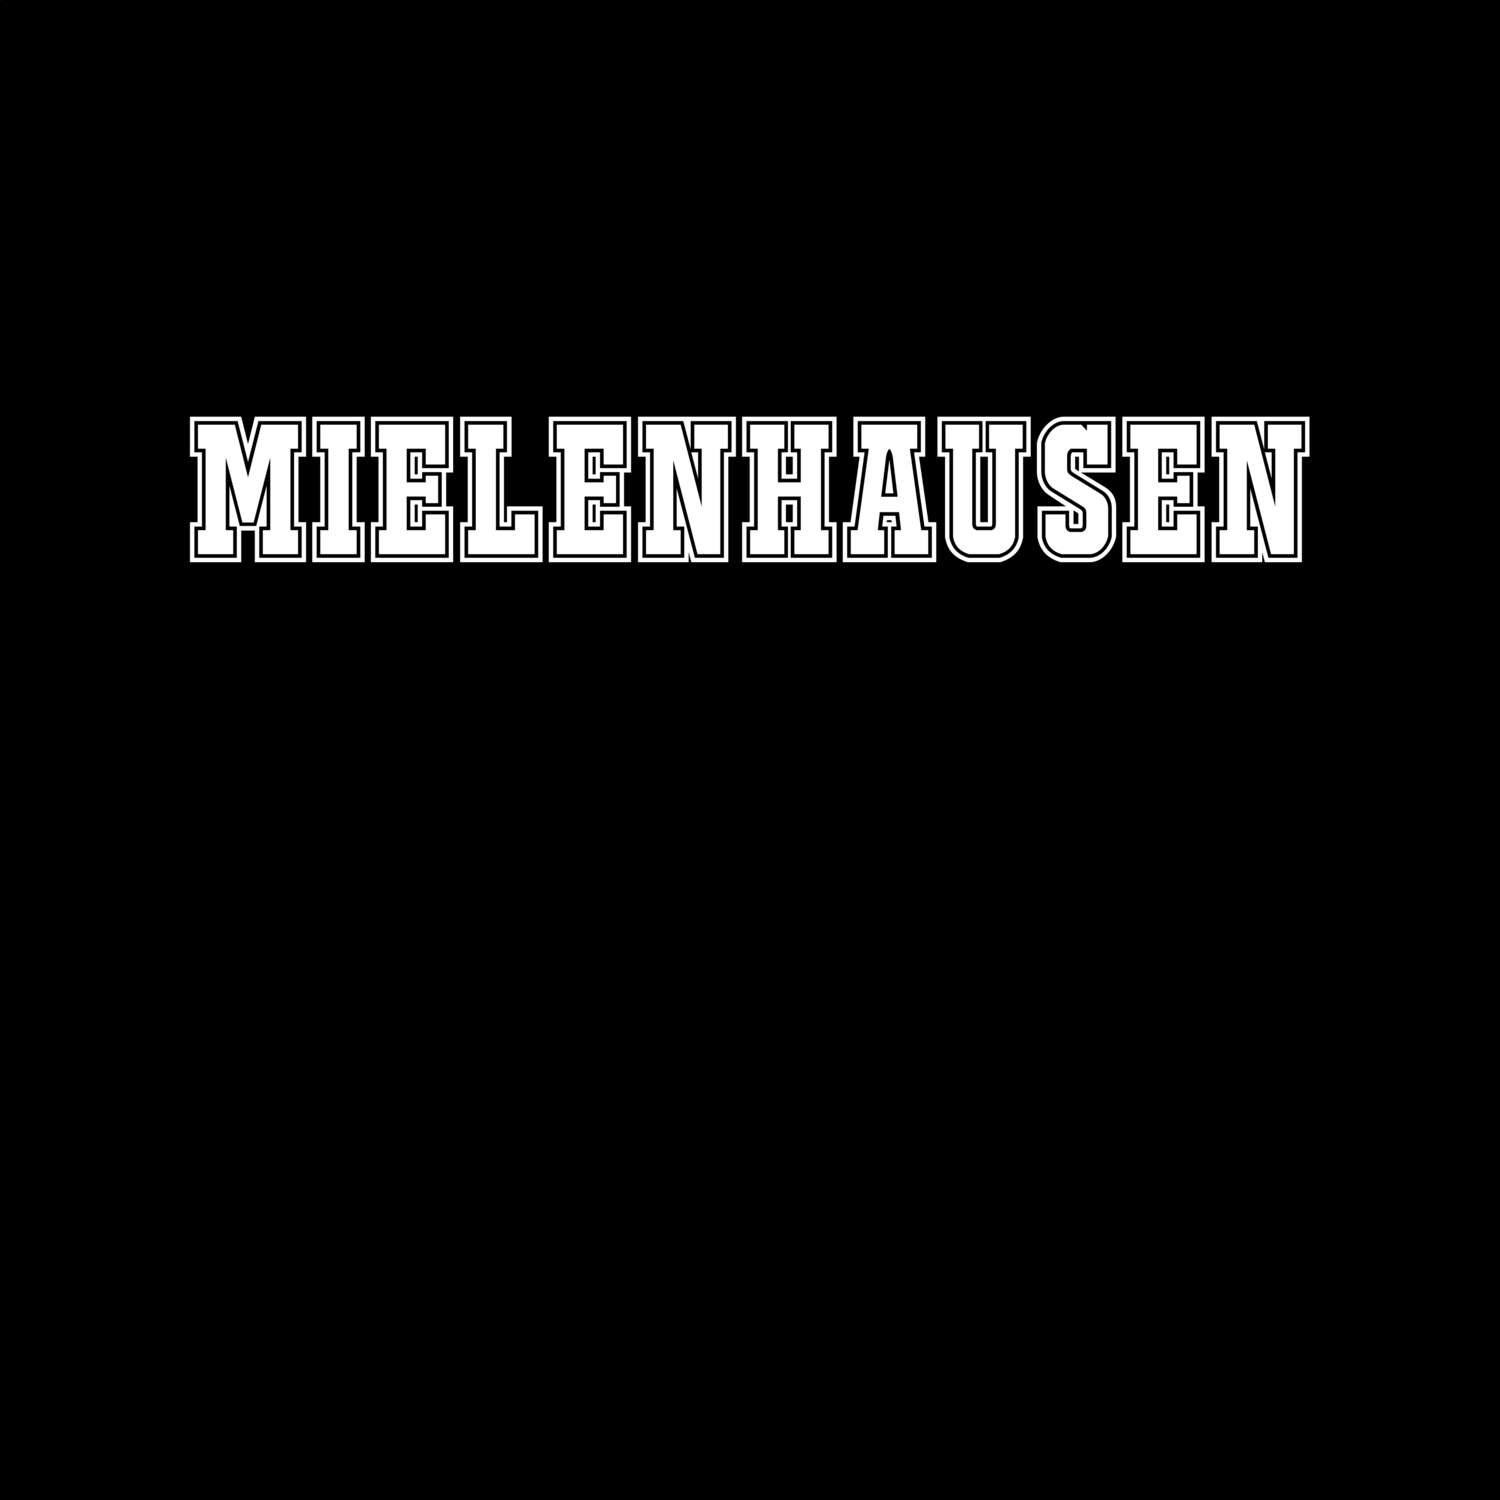 Mielenhausen T-Shirt »Classic«